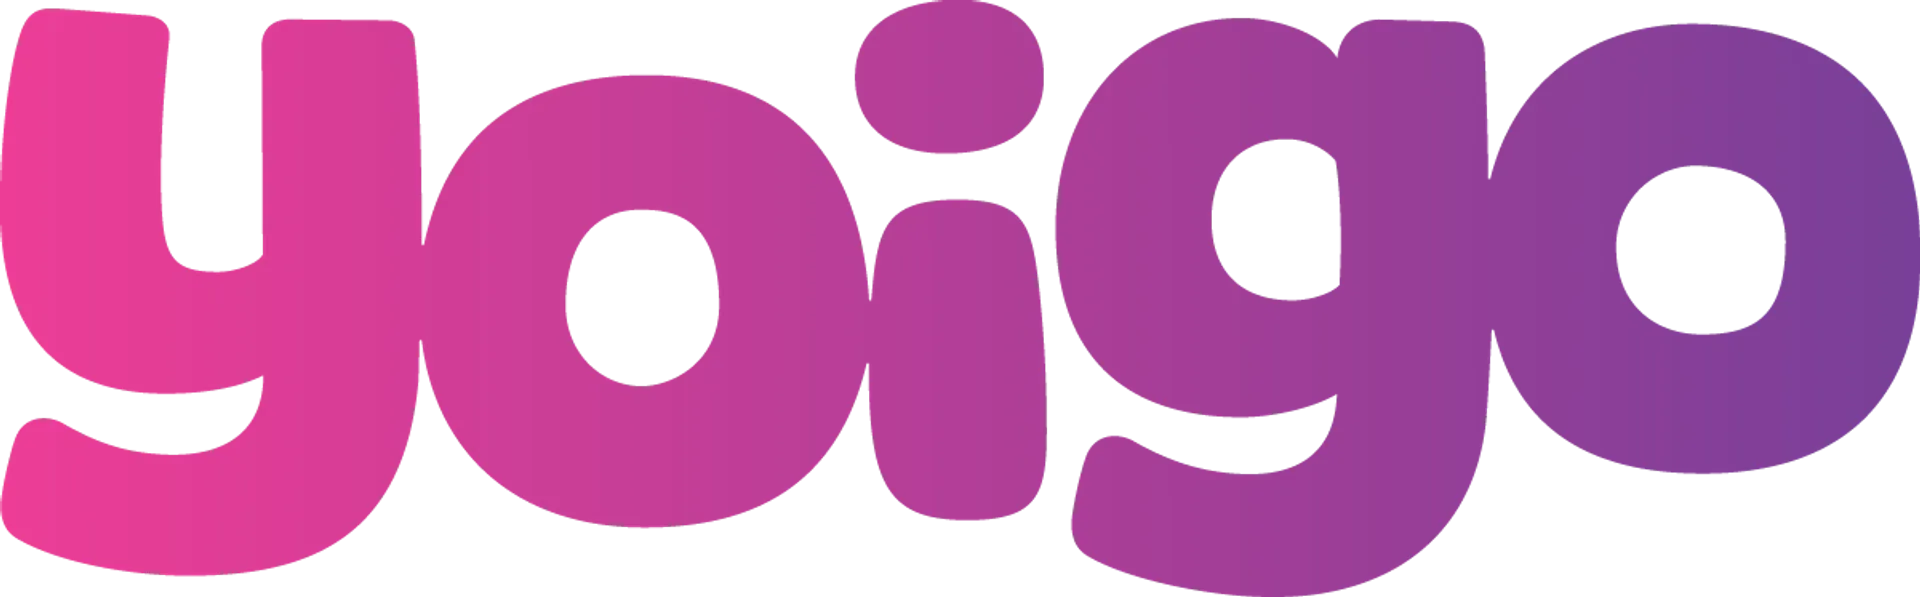 YOIGO logo de catálogo